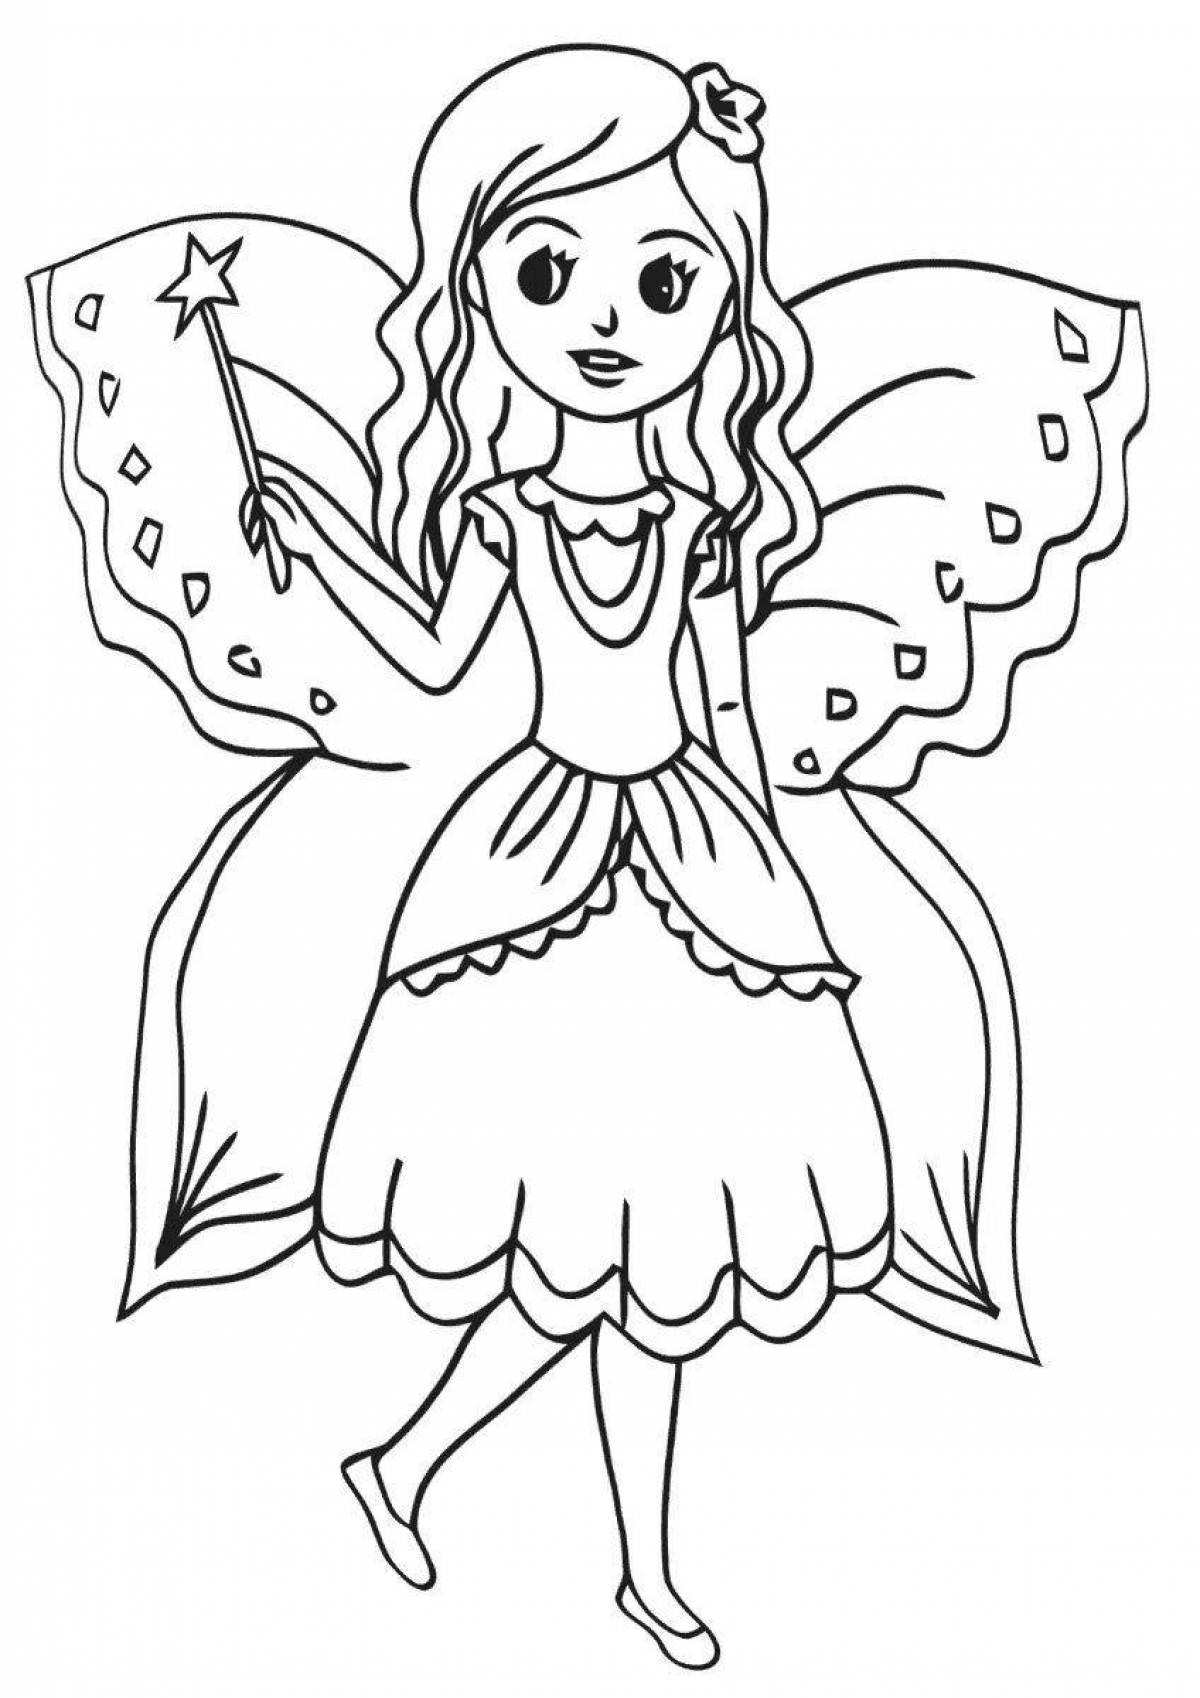 Coloring page cheerful princess marlene